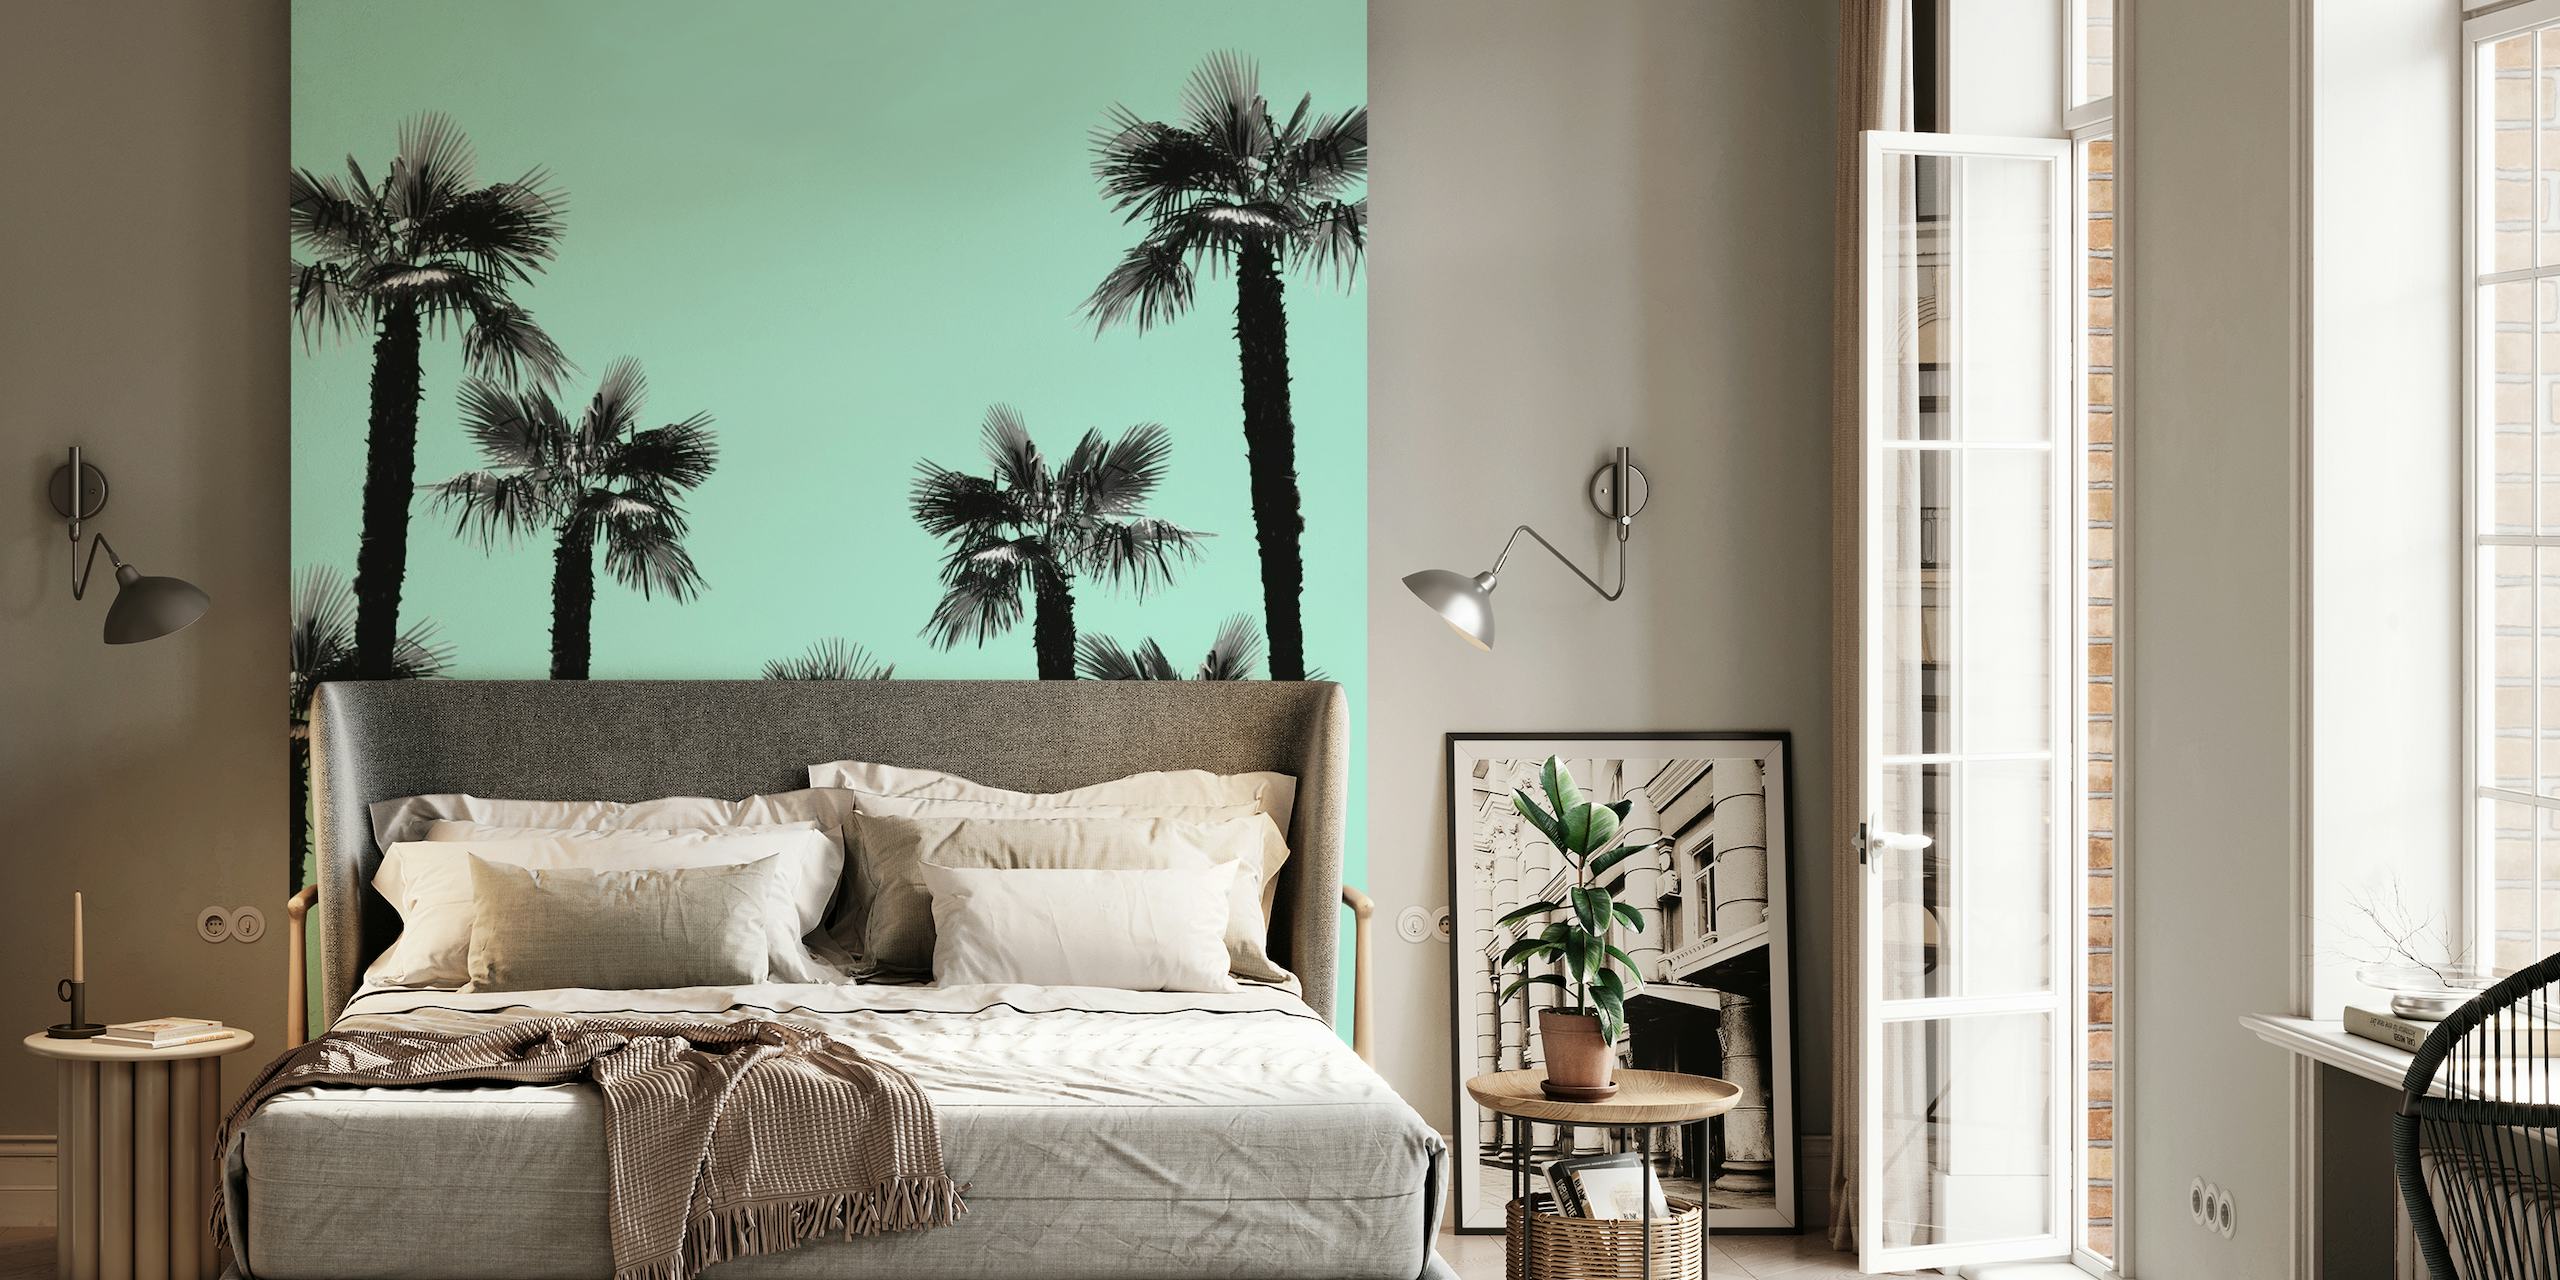 Tropical Palm Trees Dream 5 behang